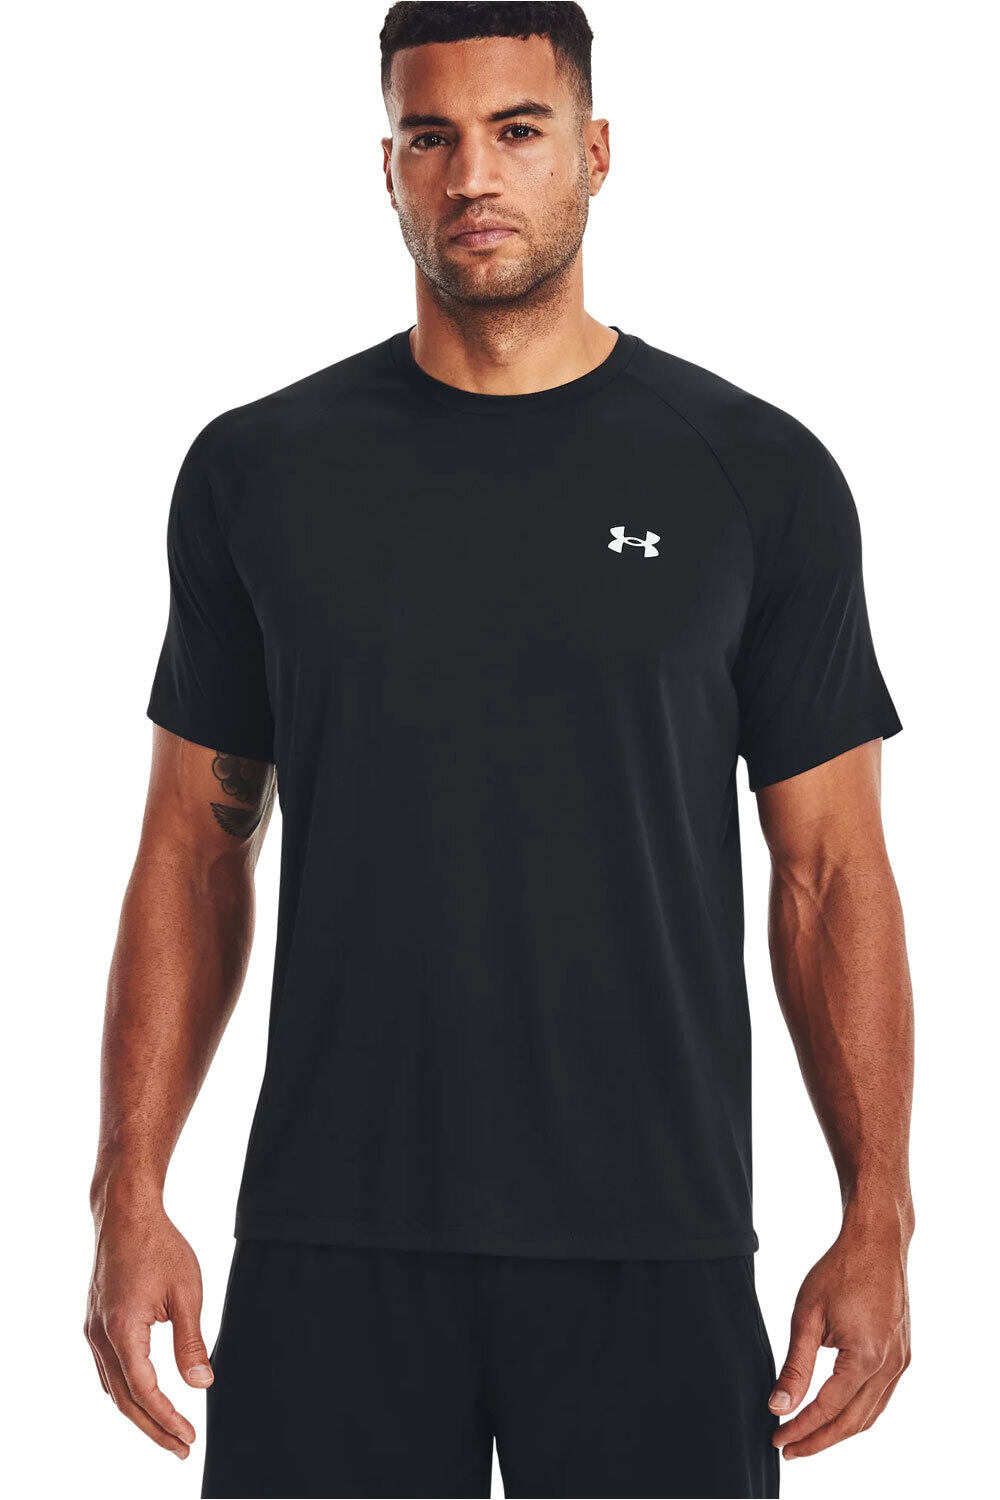 Under Armour camiseta fitness hombre UA Tech Reflective SS vista frontal